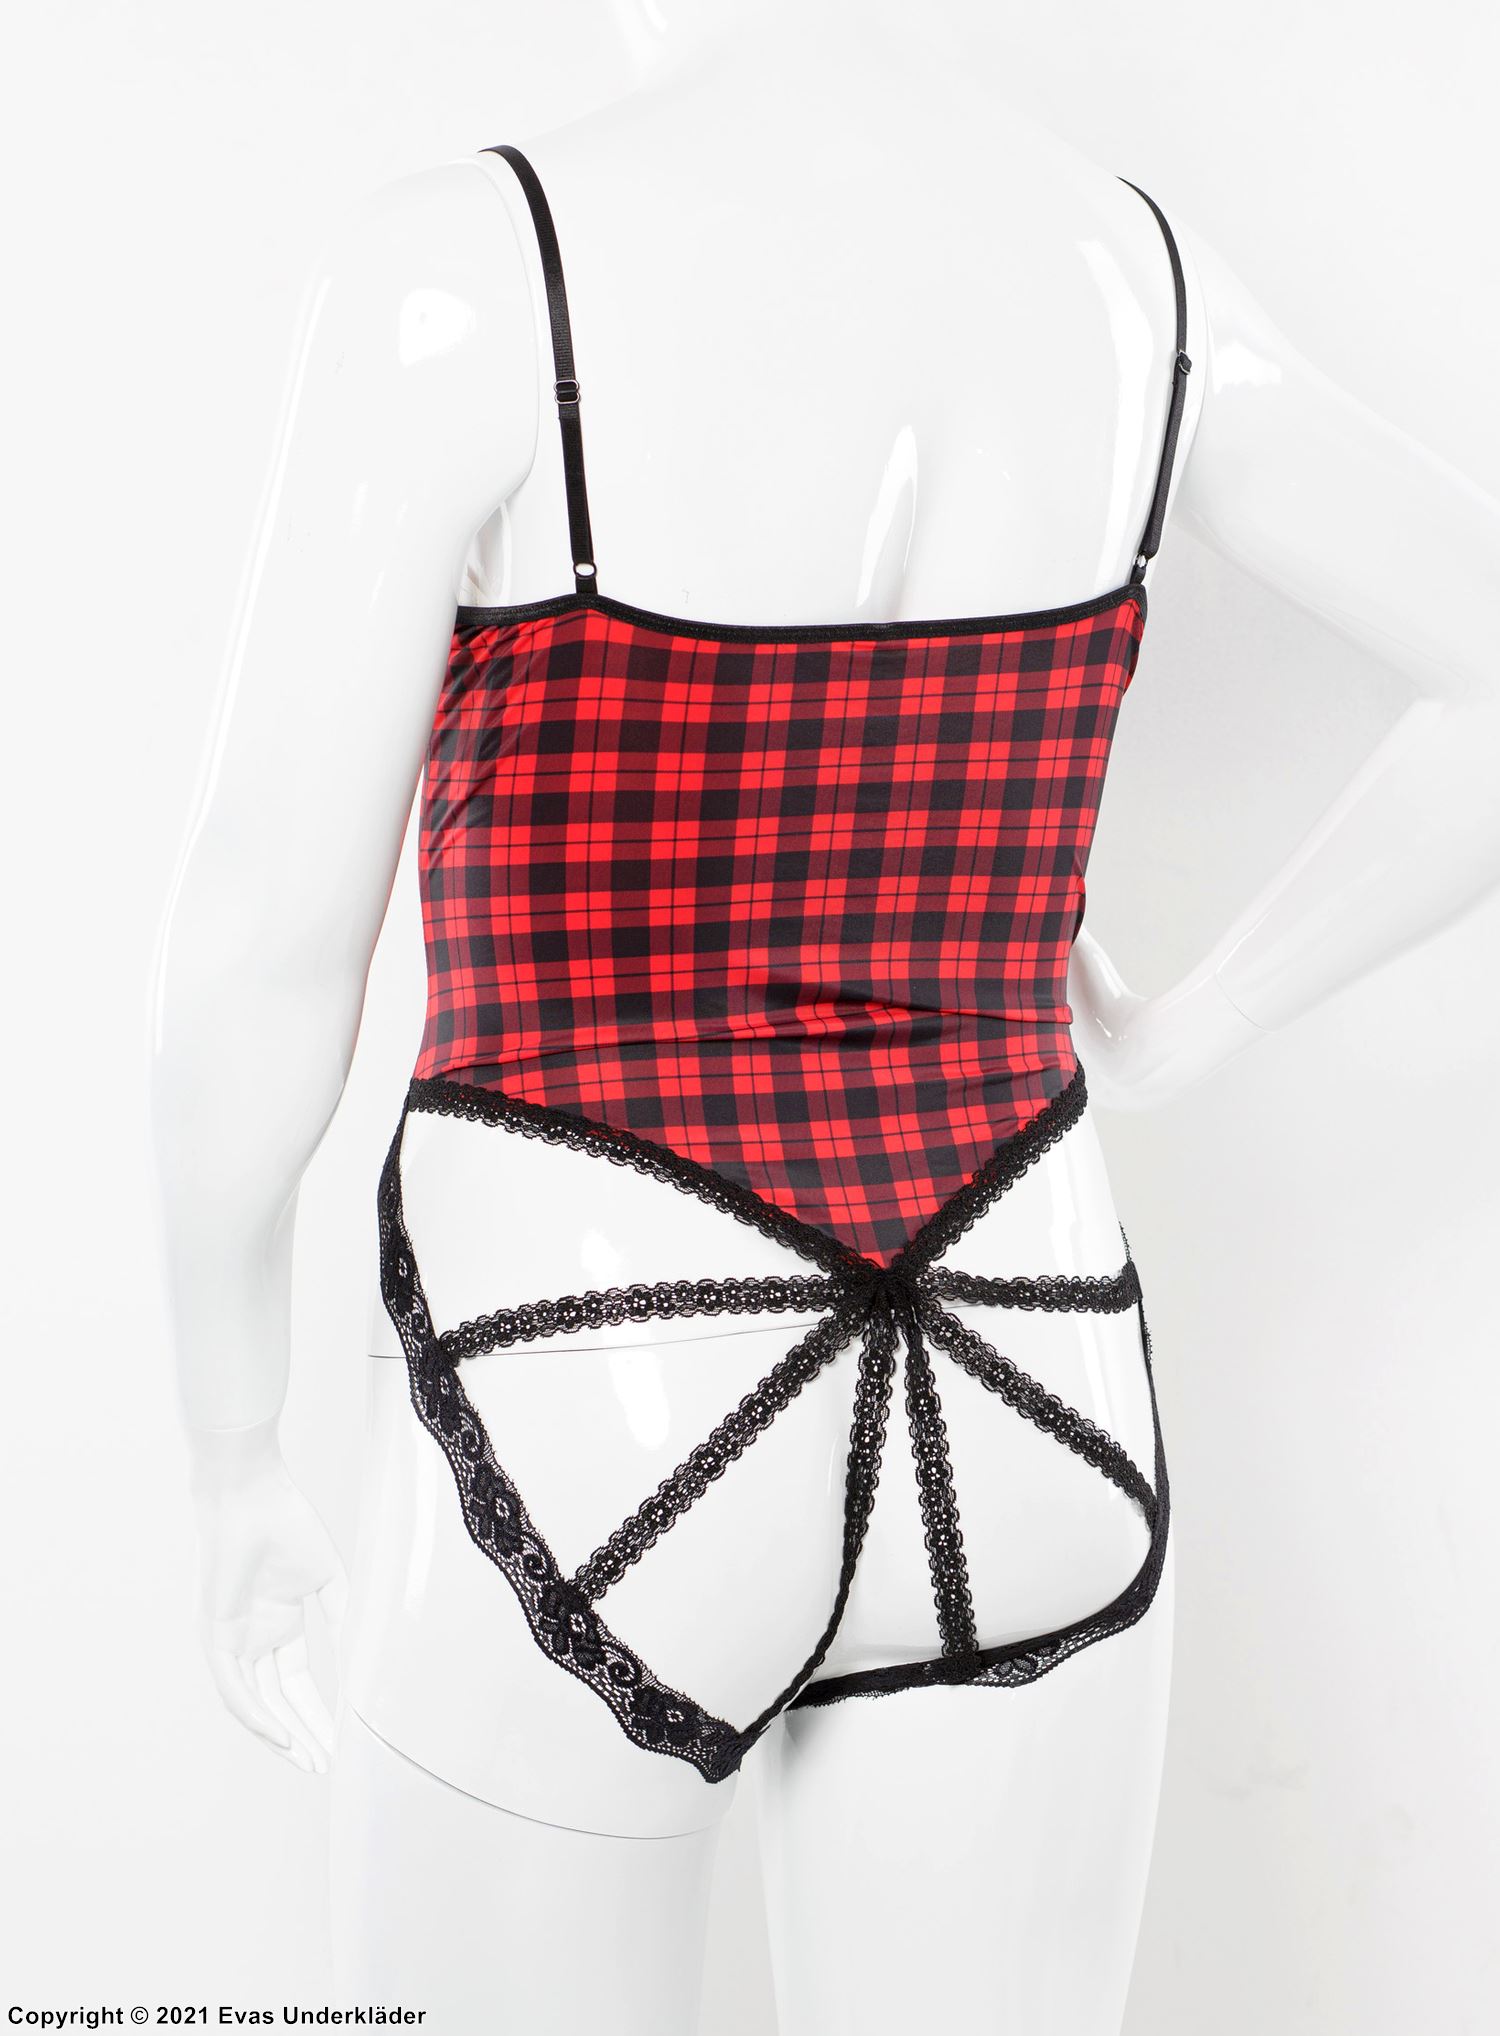 Romantic teddy, lace edge, deep neckline, cage back, scott-checkered pattern, plus size